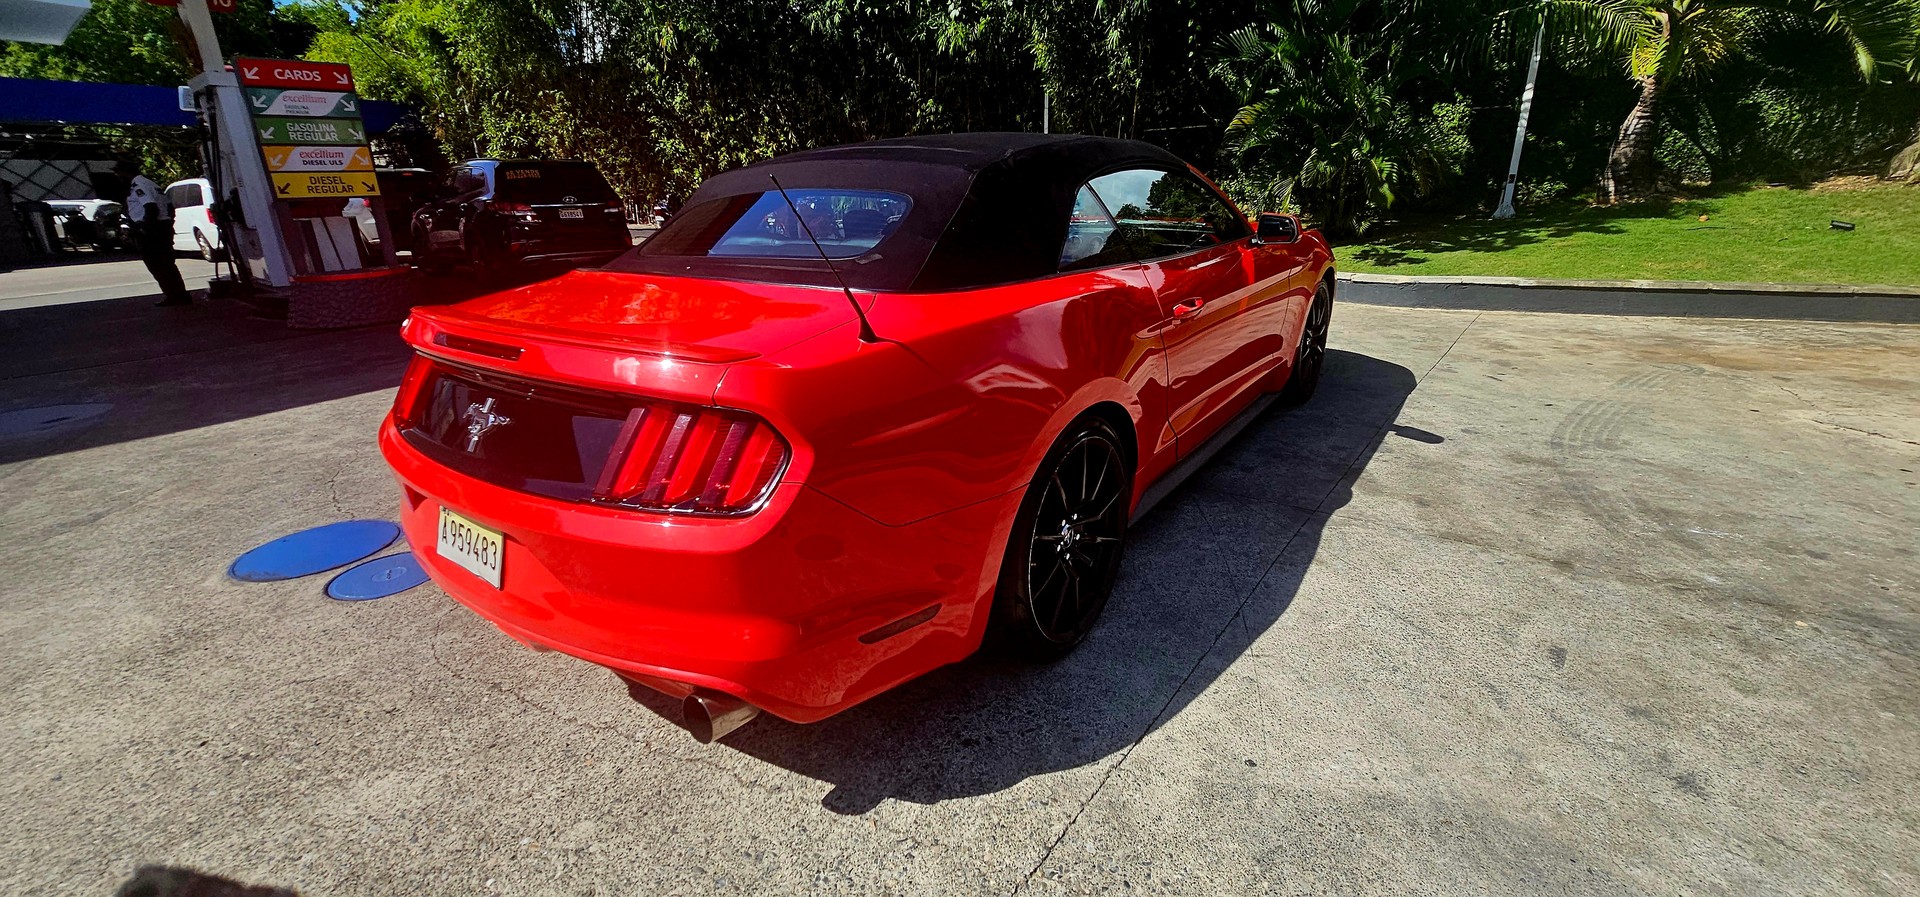 carros - Ford Mustang Premiun Convertible 3.7, v6 4